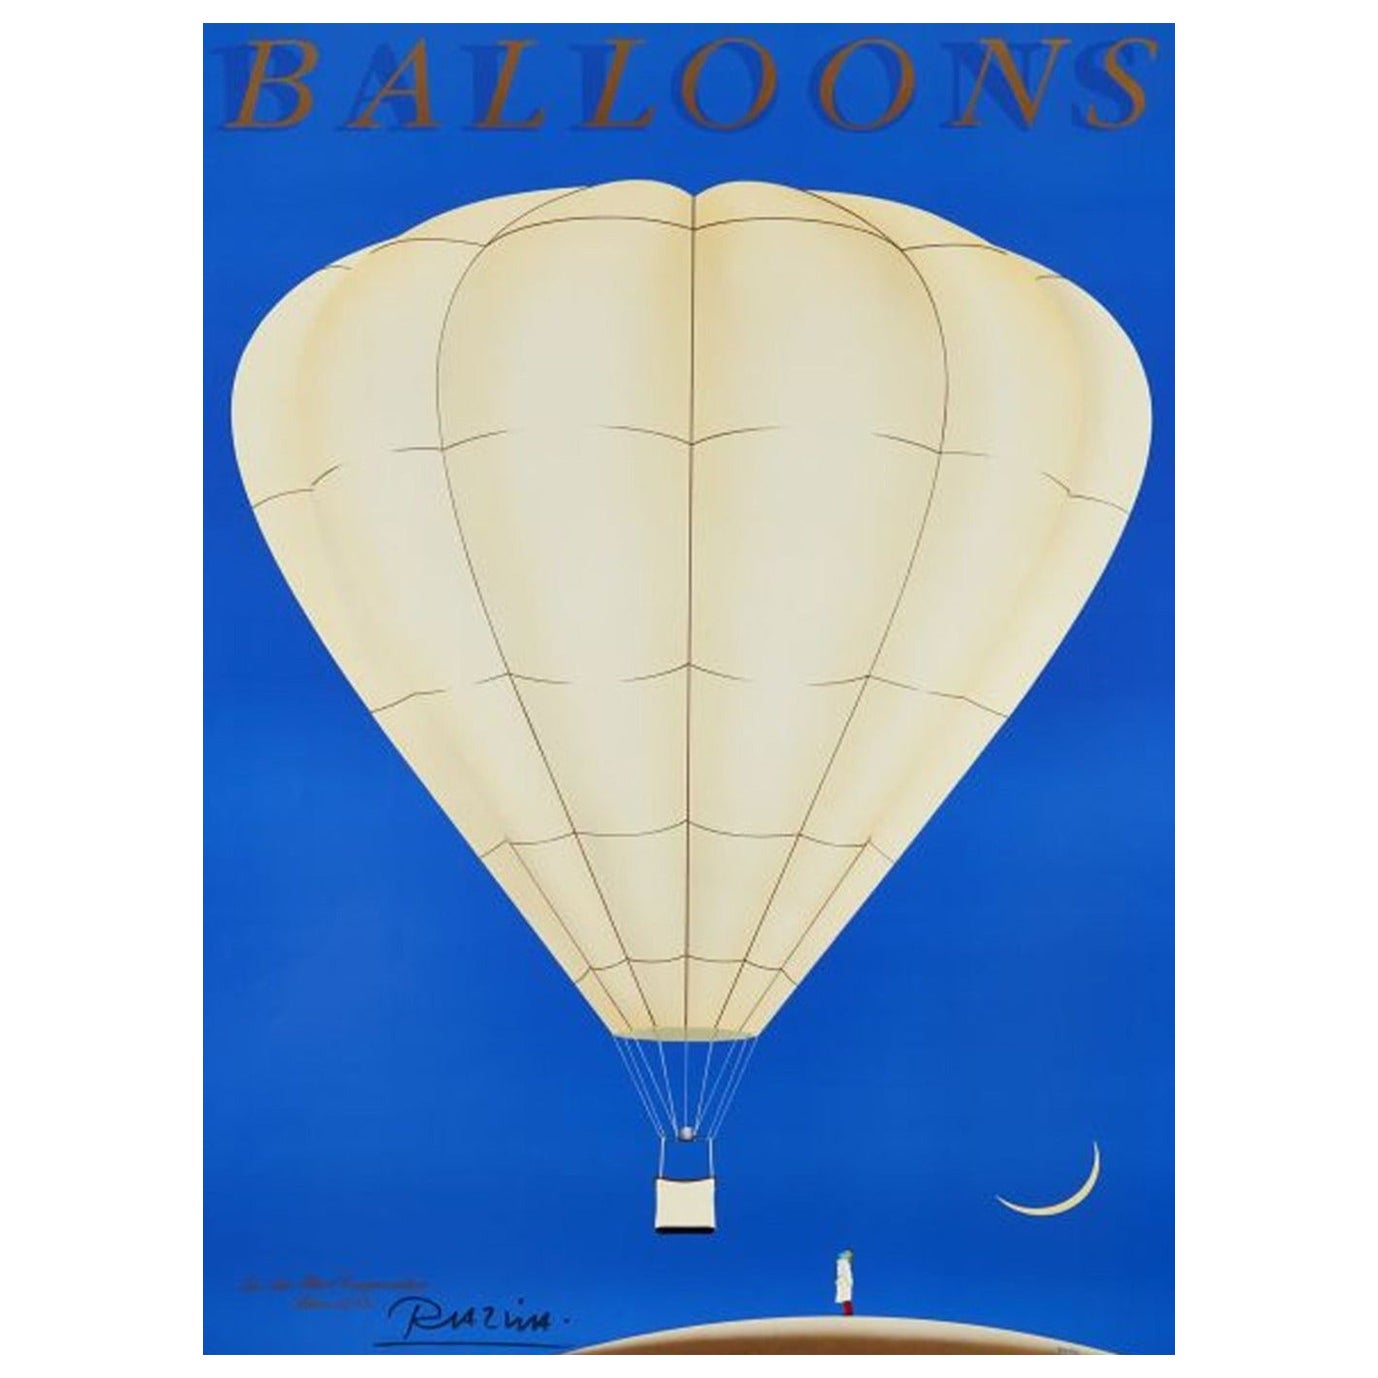 1985 Balloons - Razzia Original Vintage Poster For Sale